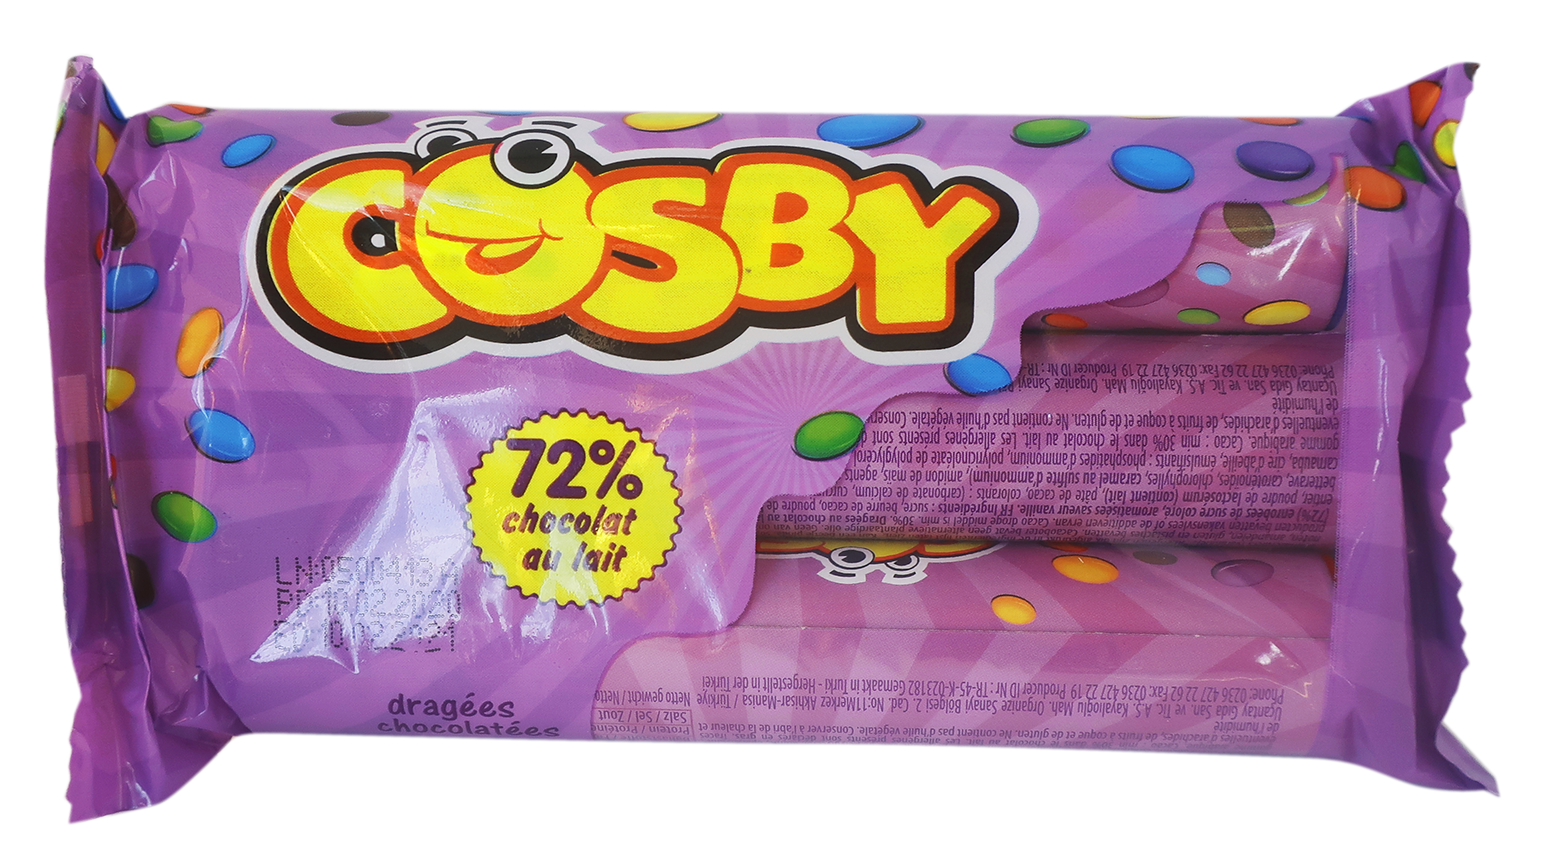 Dragées chocolatées Cosby